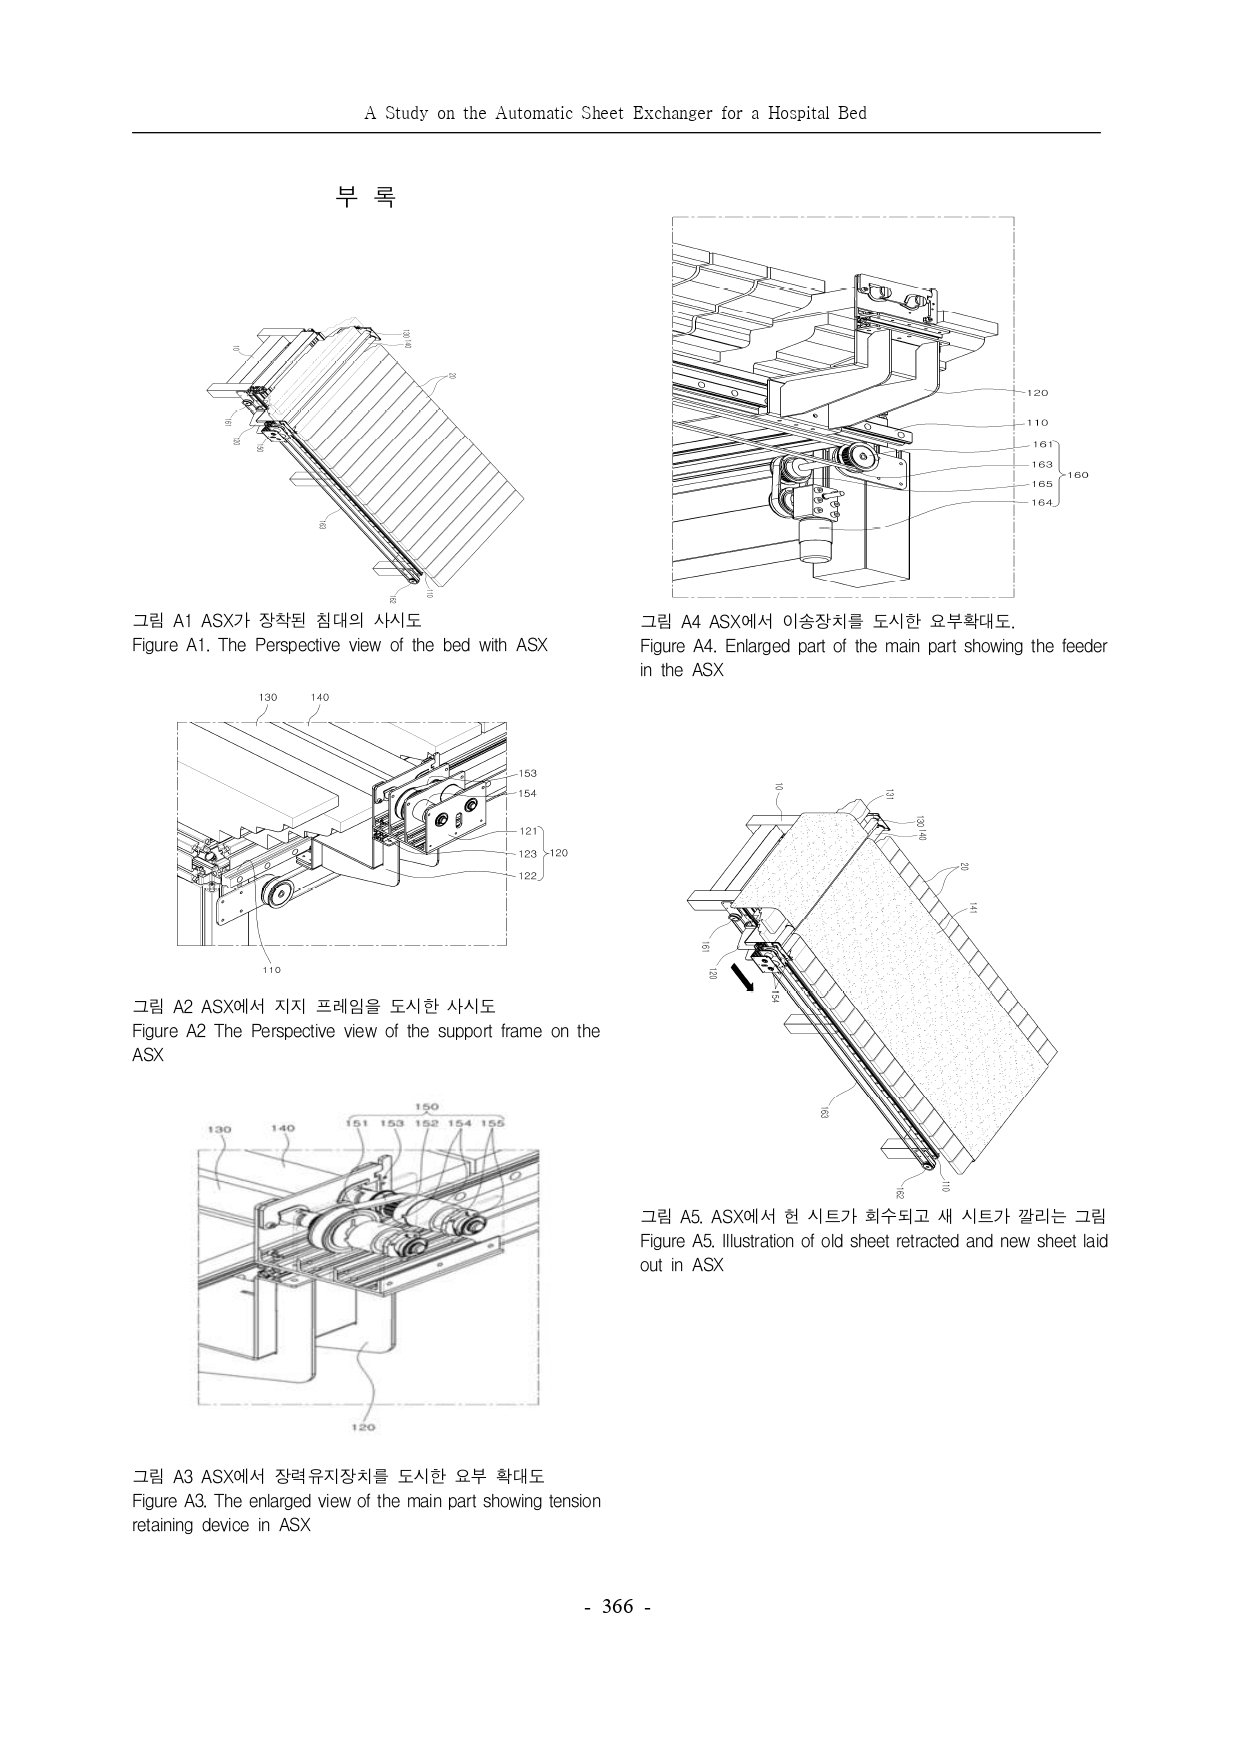 JCCT 의료용 침대를 위한 자동 시트 교환 장치 연구_page-0006.jpg